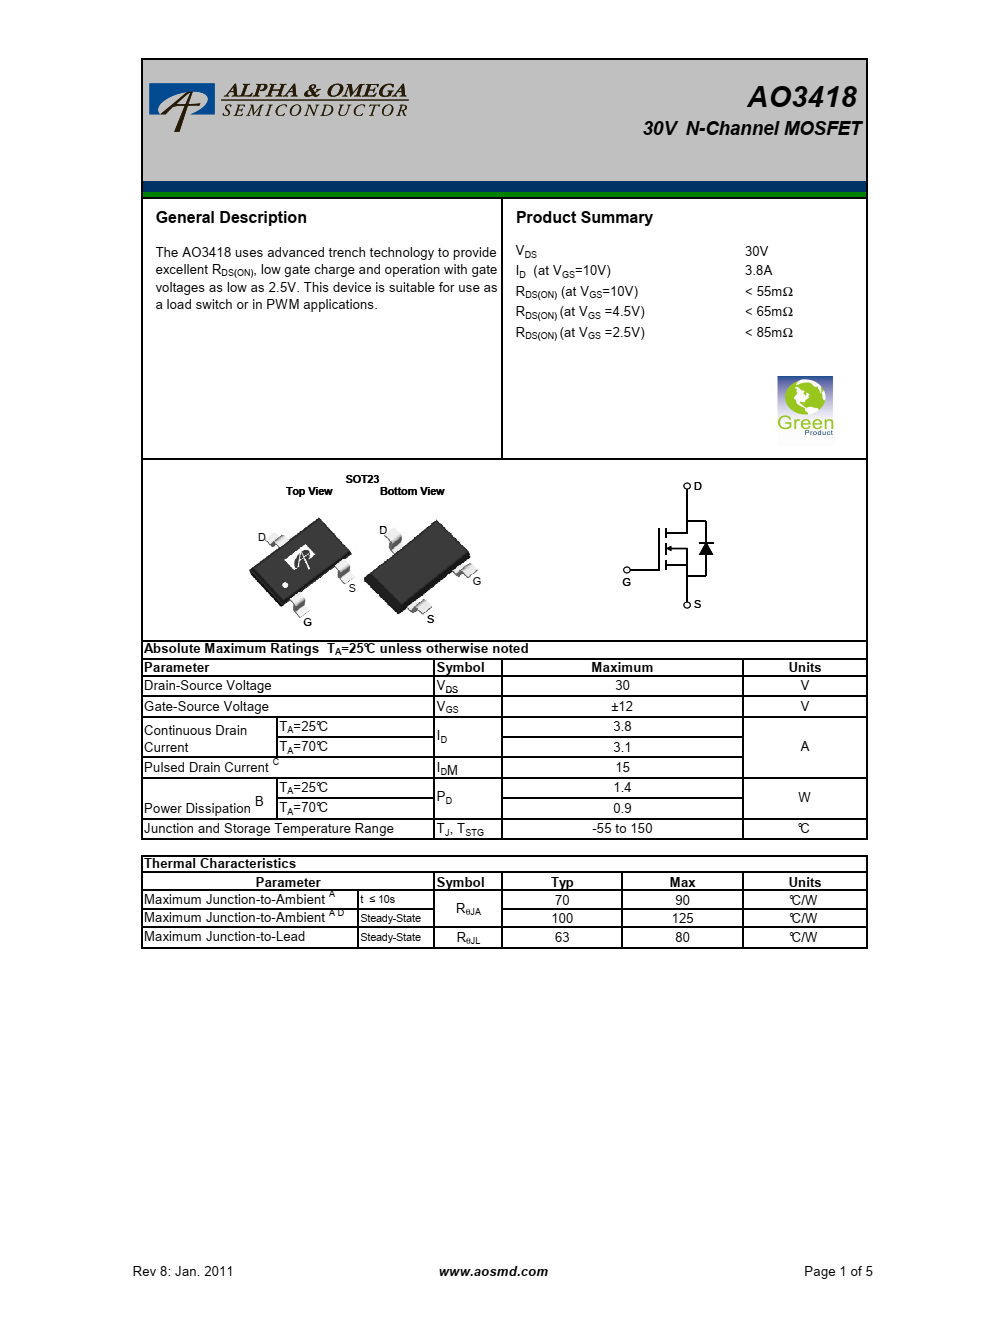 AO3418采用先进的沟槽技术，提供优良的RD（ON）、低栅极电荷和低至2.5V的栅极电压运行